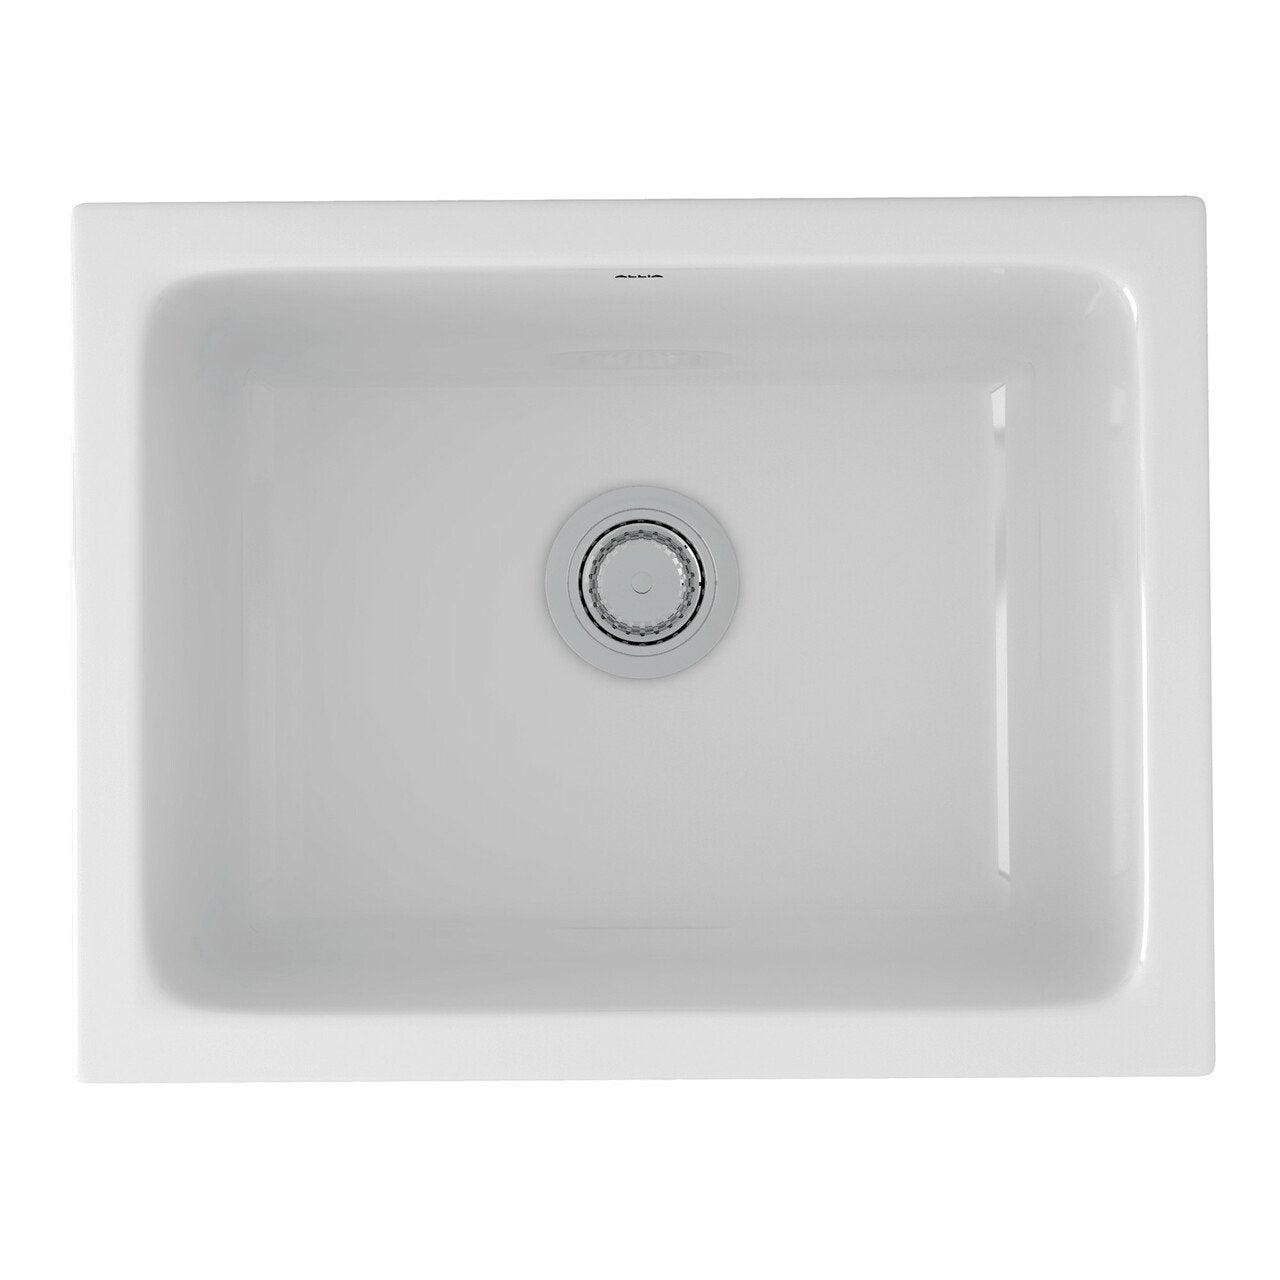 Rohl White Allia Fireclay Single Bowl Undermount Kitchen Sink 6347 00